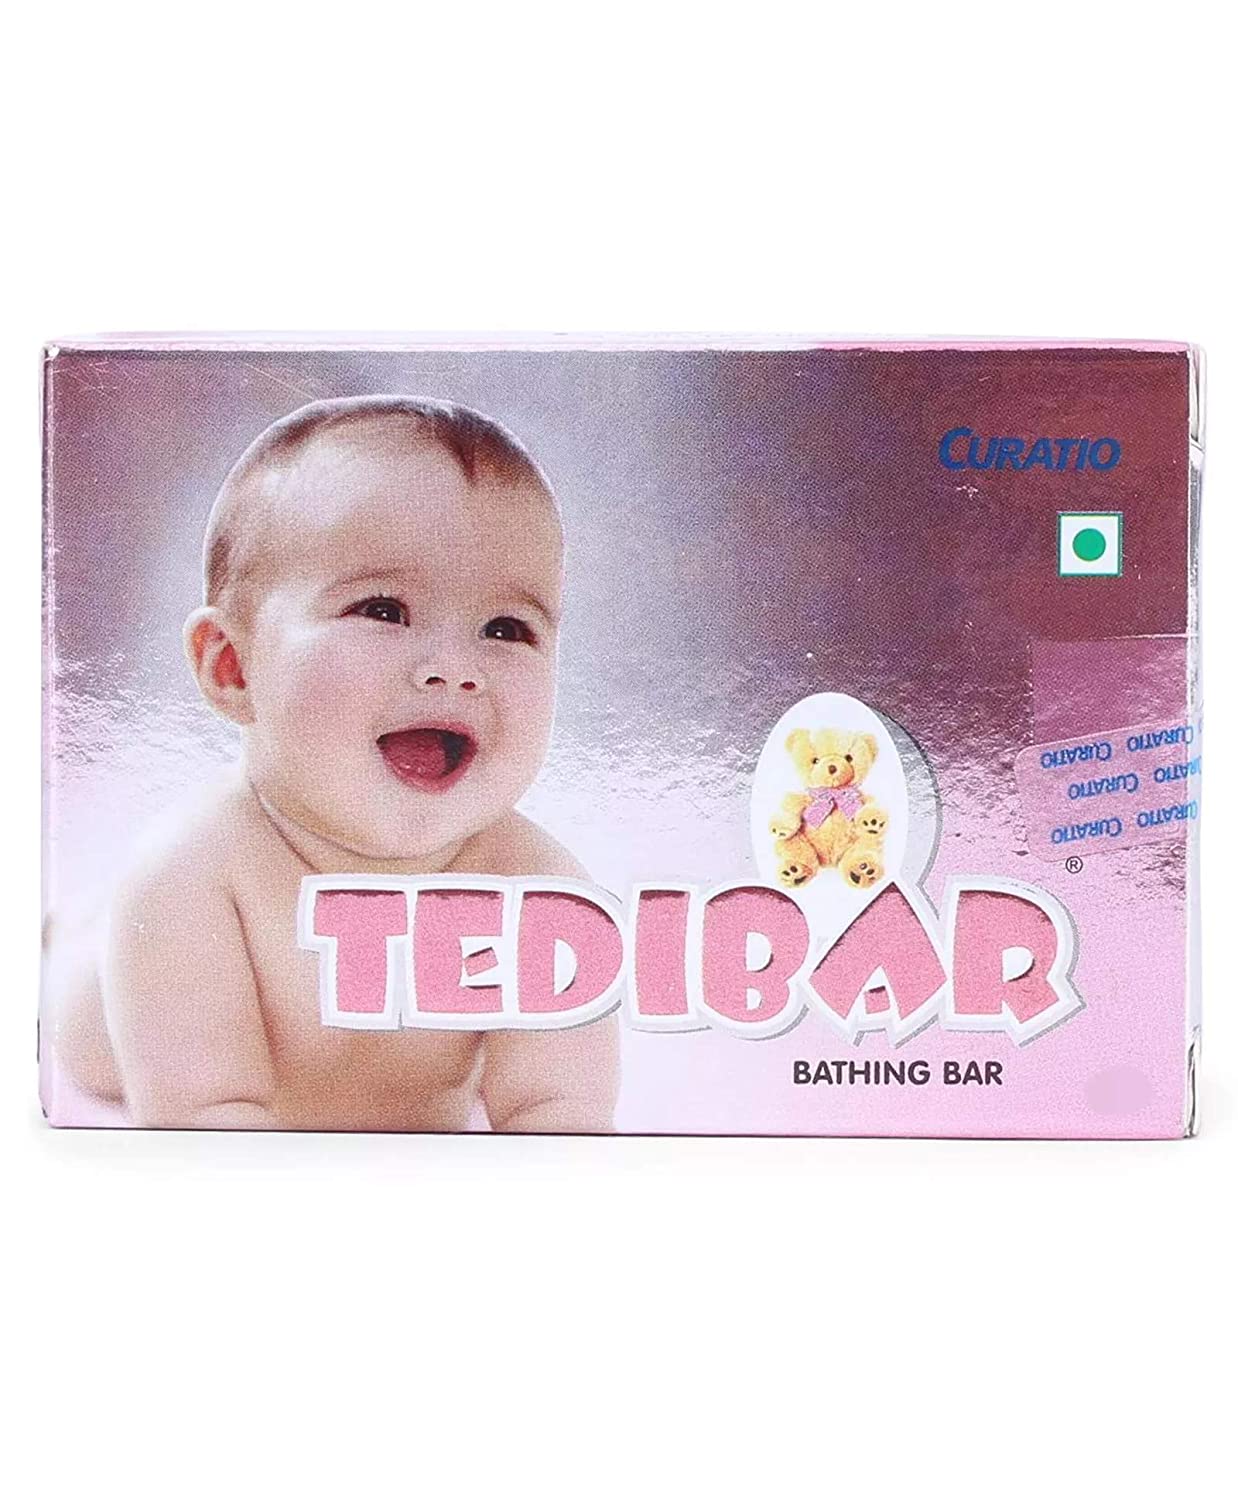 Tedibar bathing bar